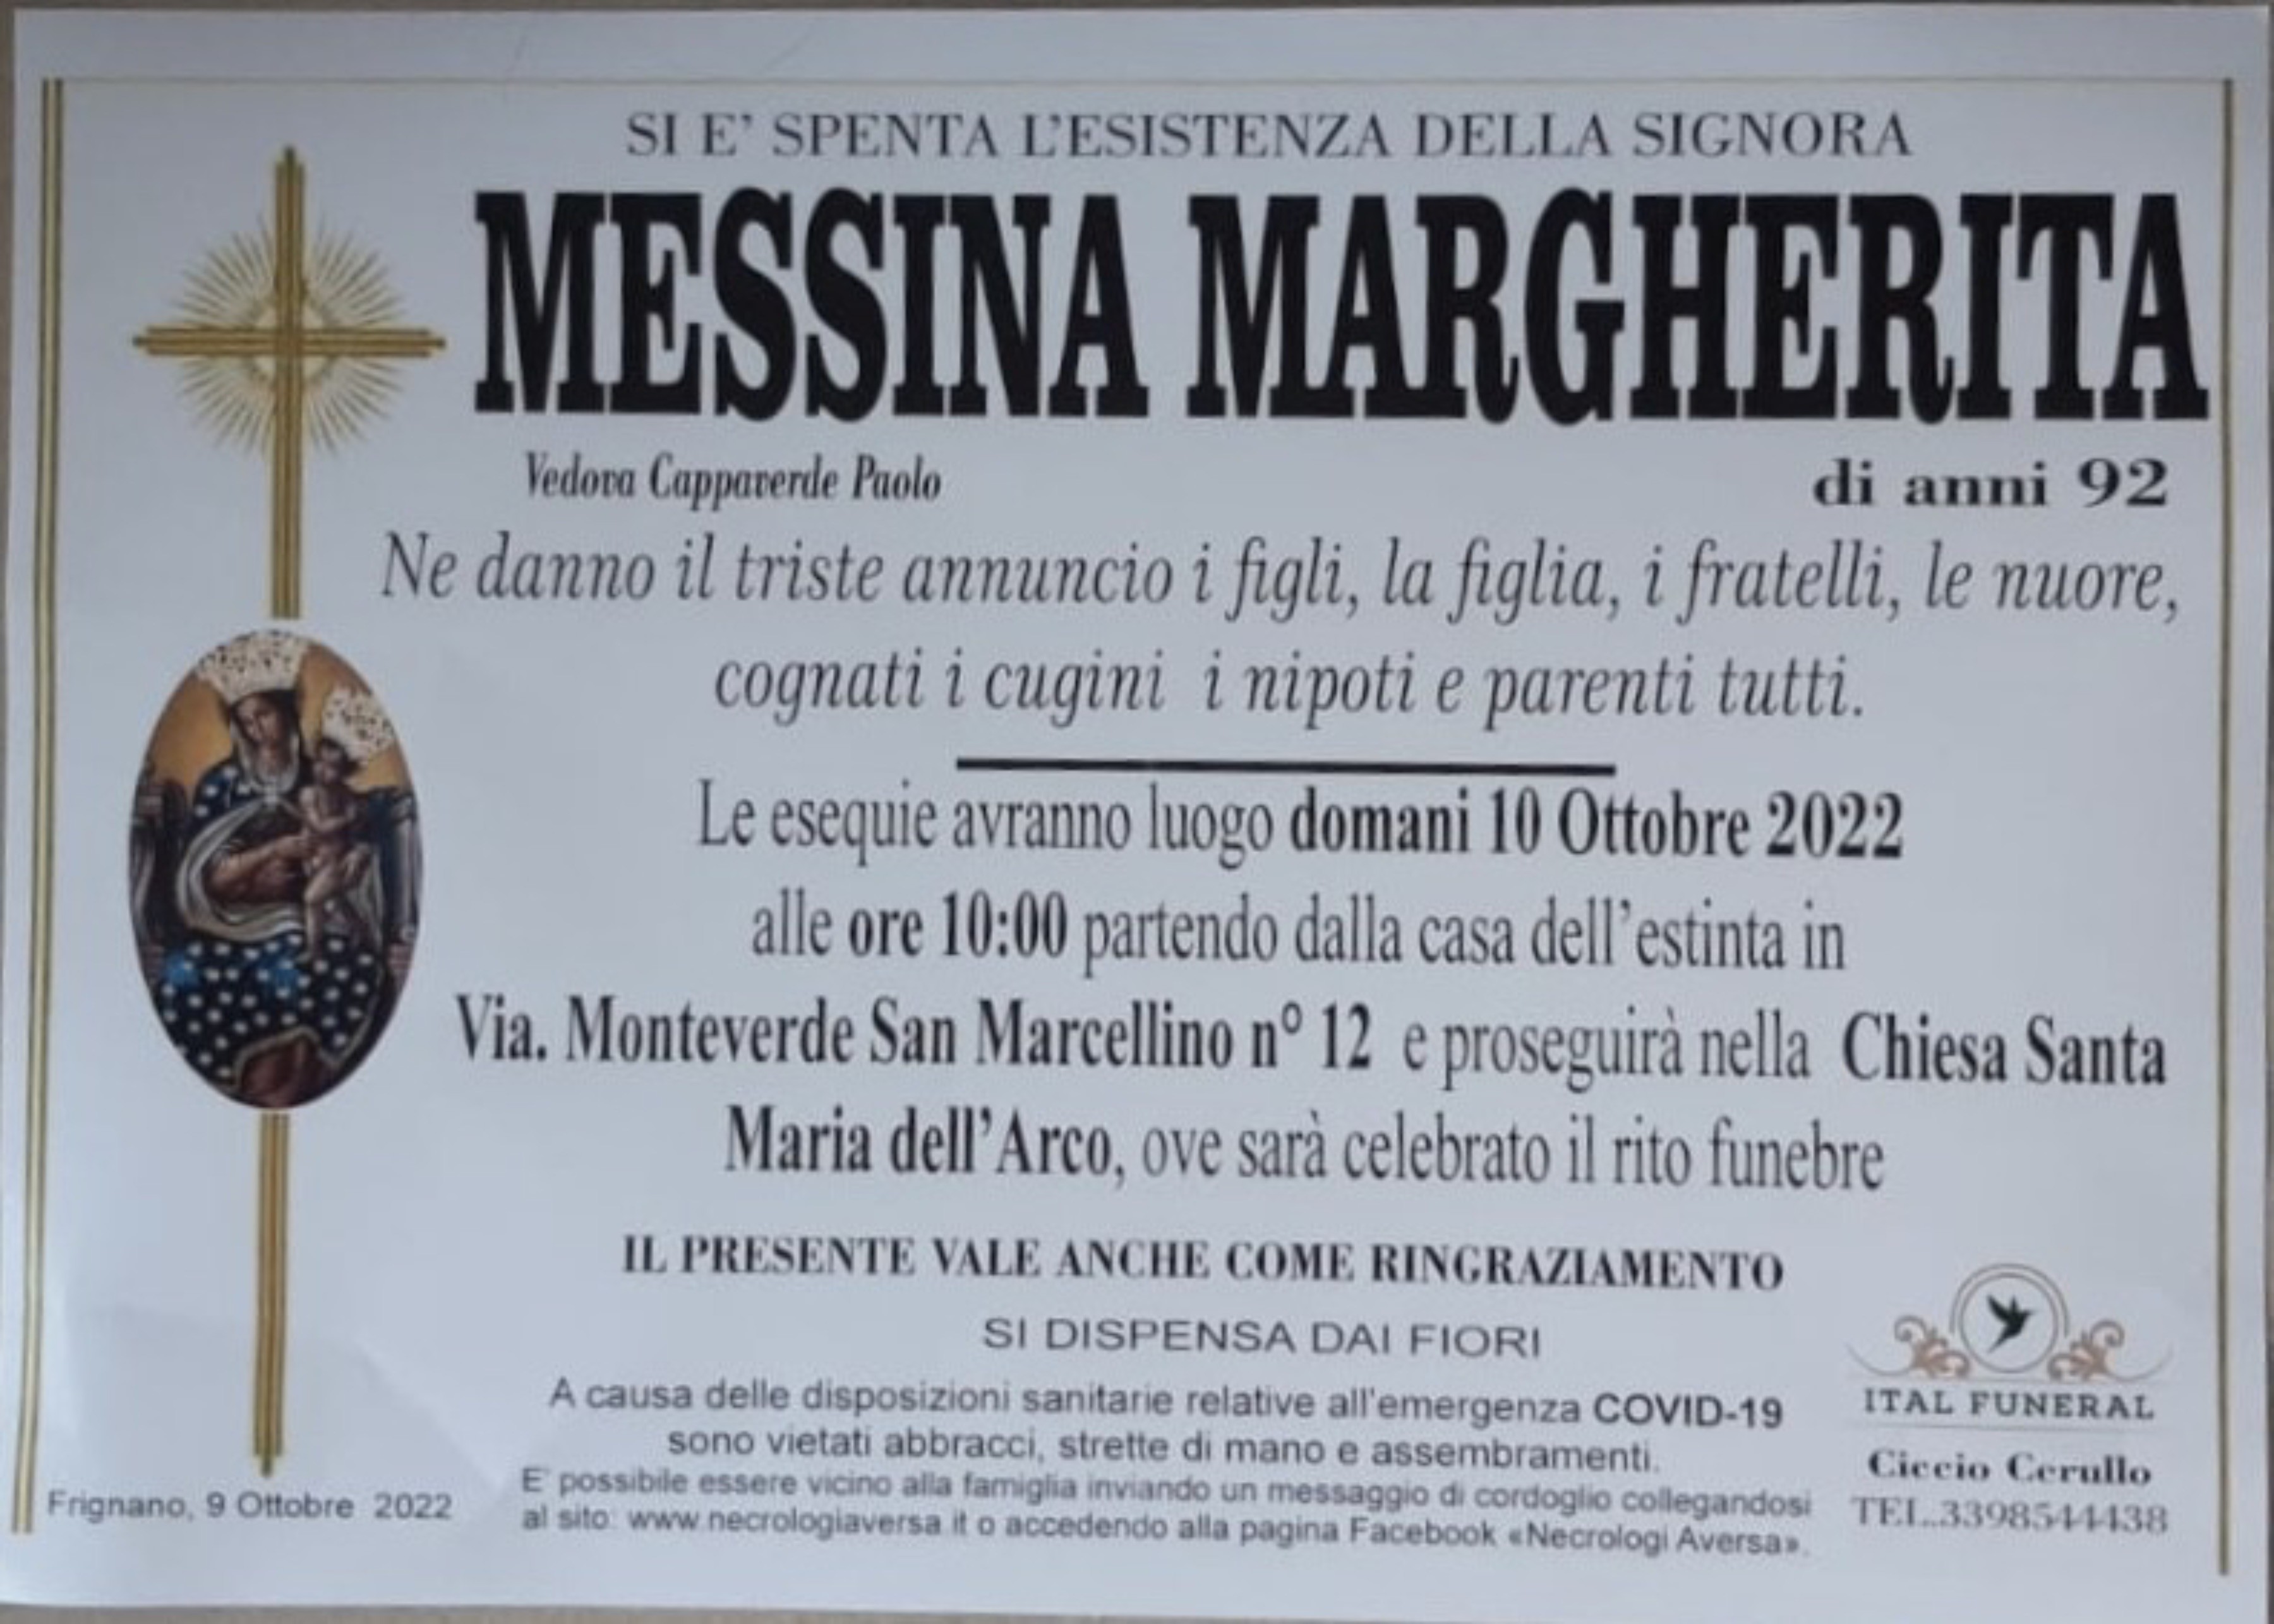 Margherita Messina